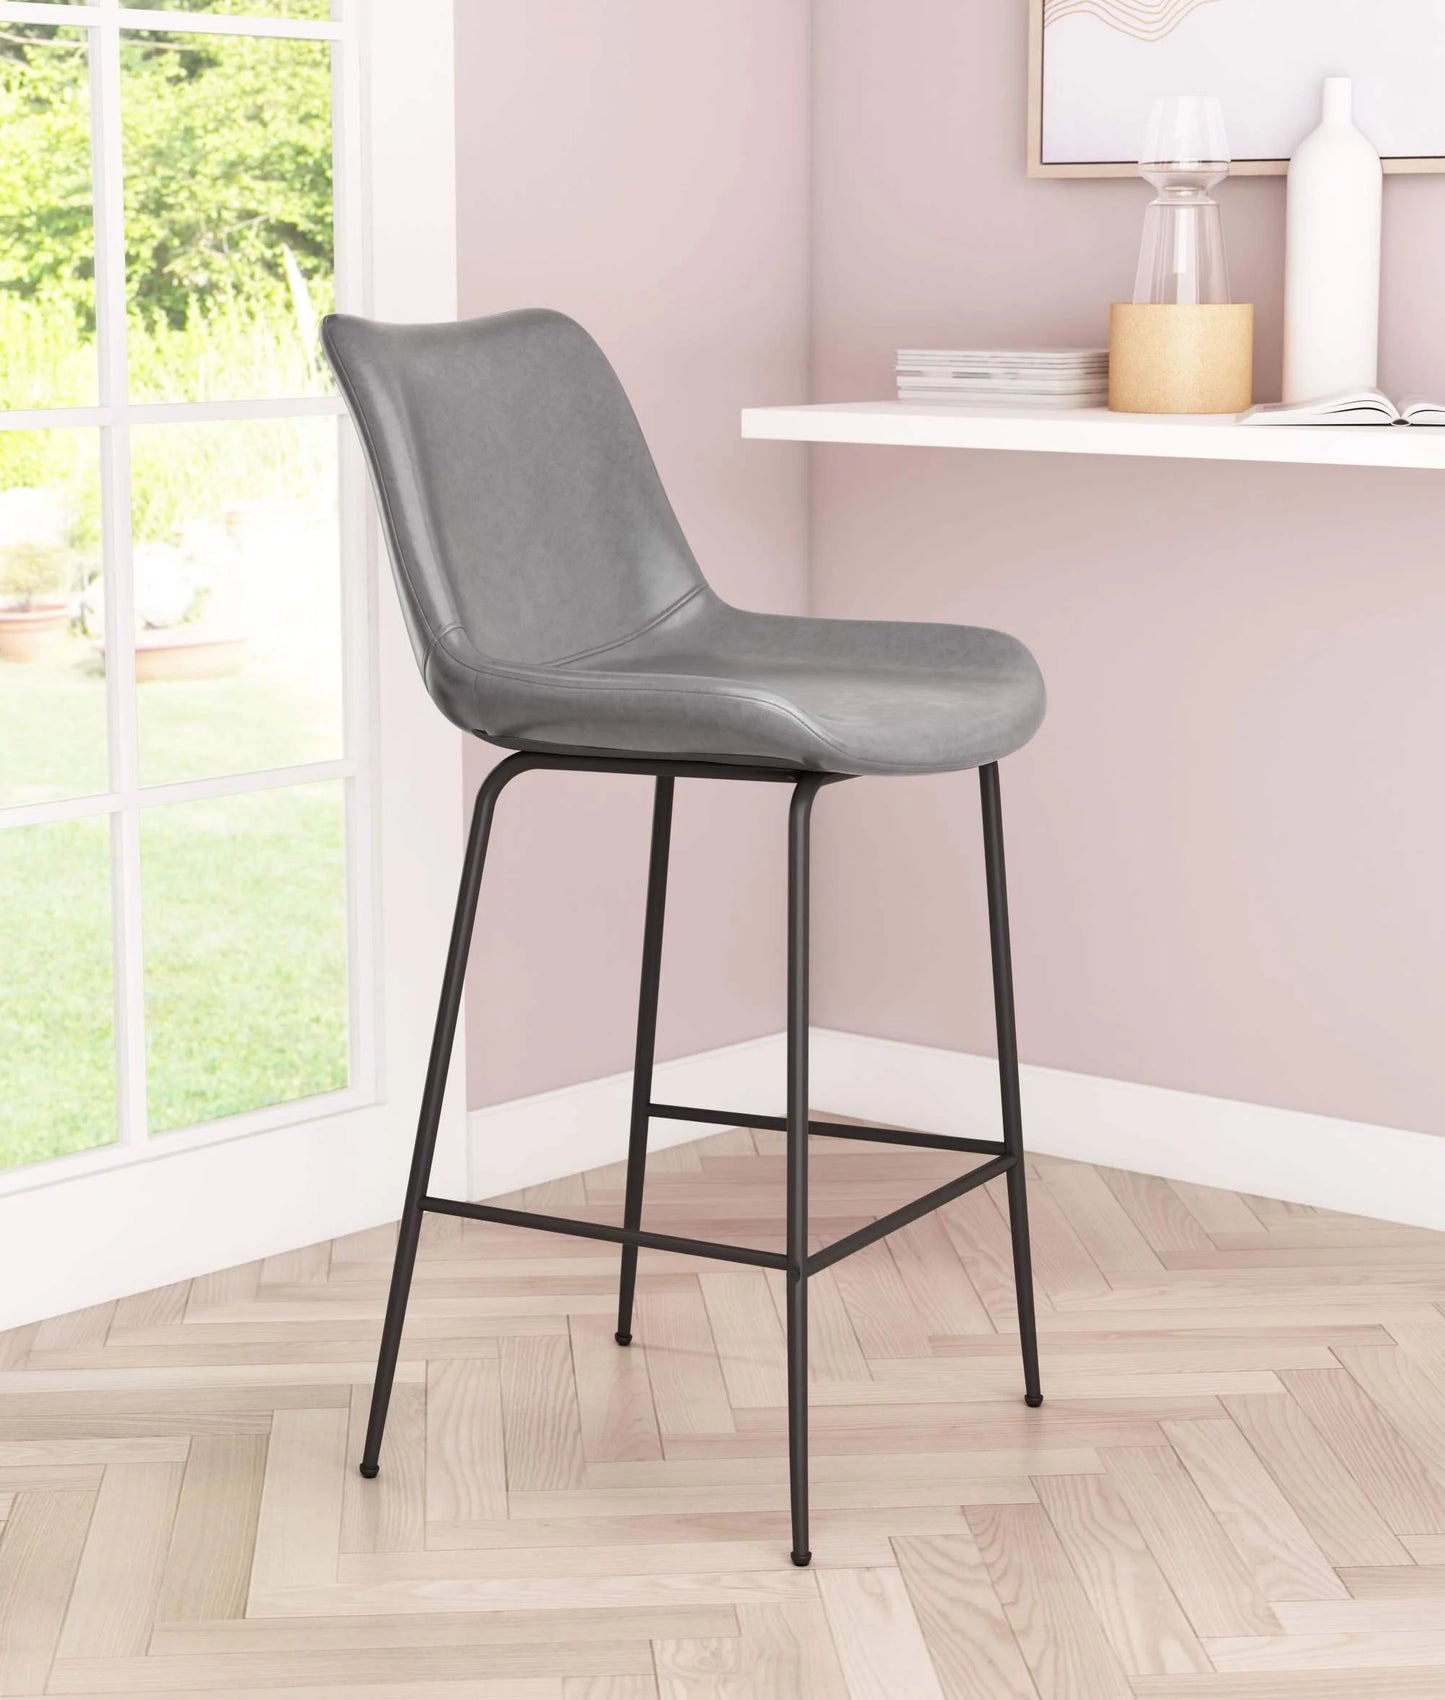 Byron Counter Stool Gray single modern chair